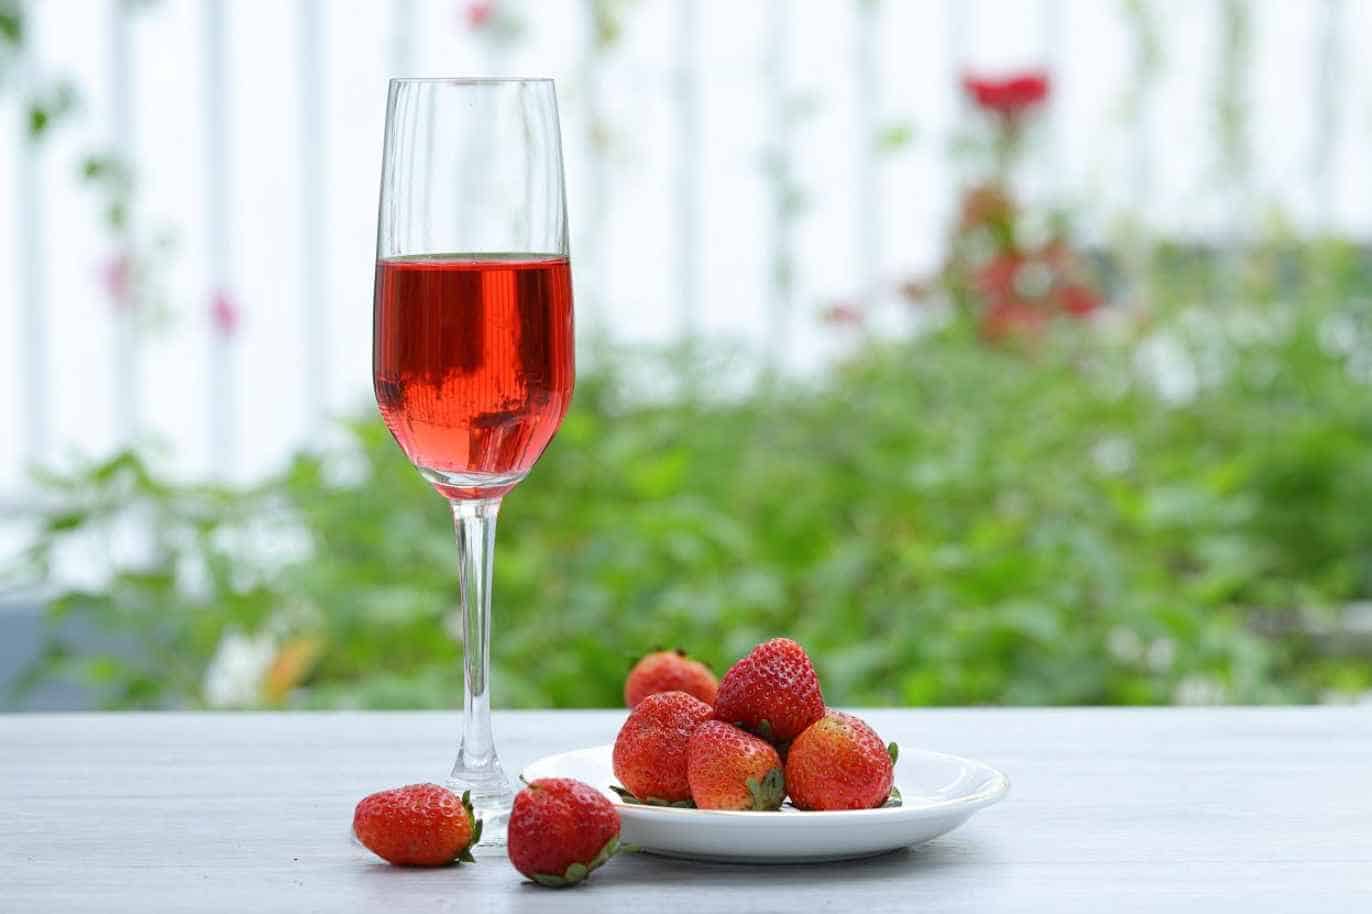 How to Make Strawberry Wine?